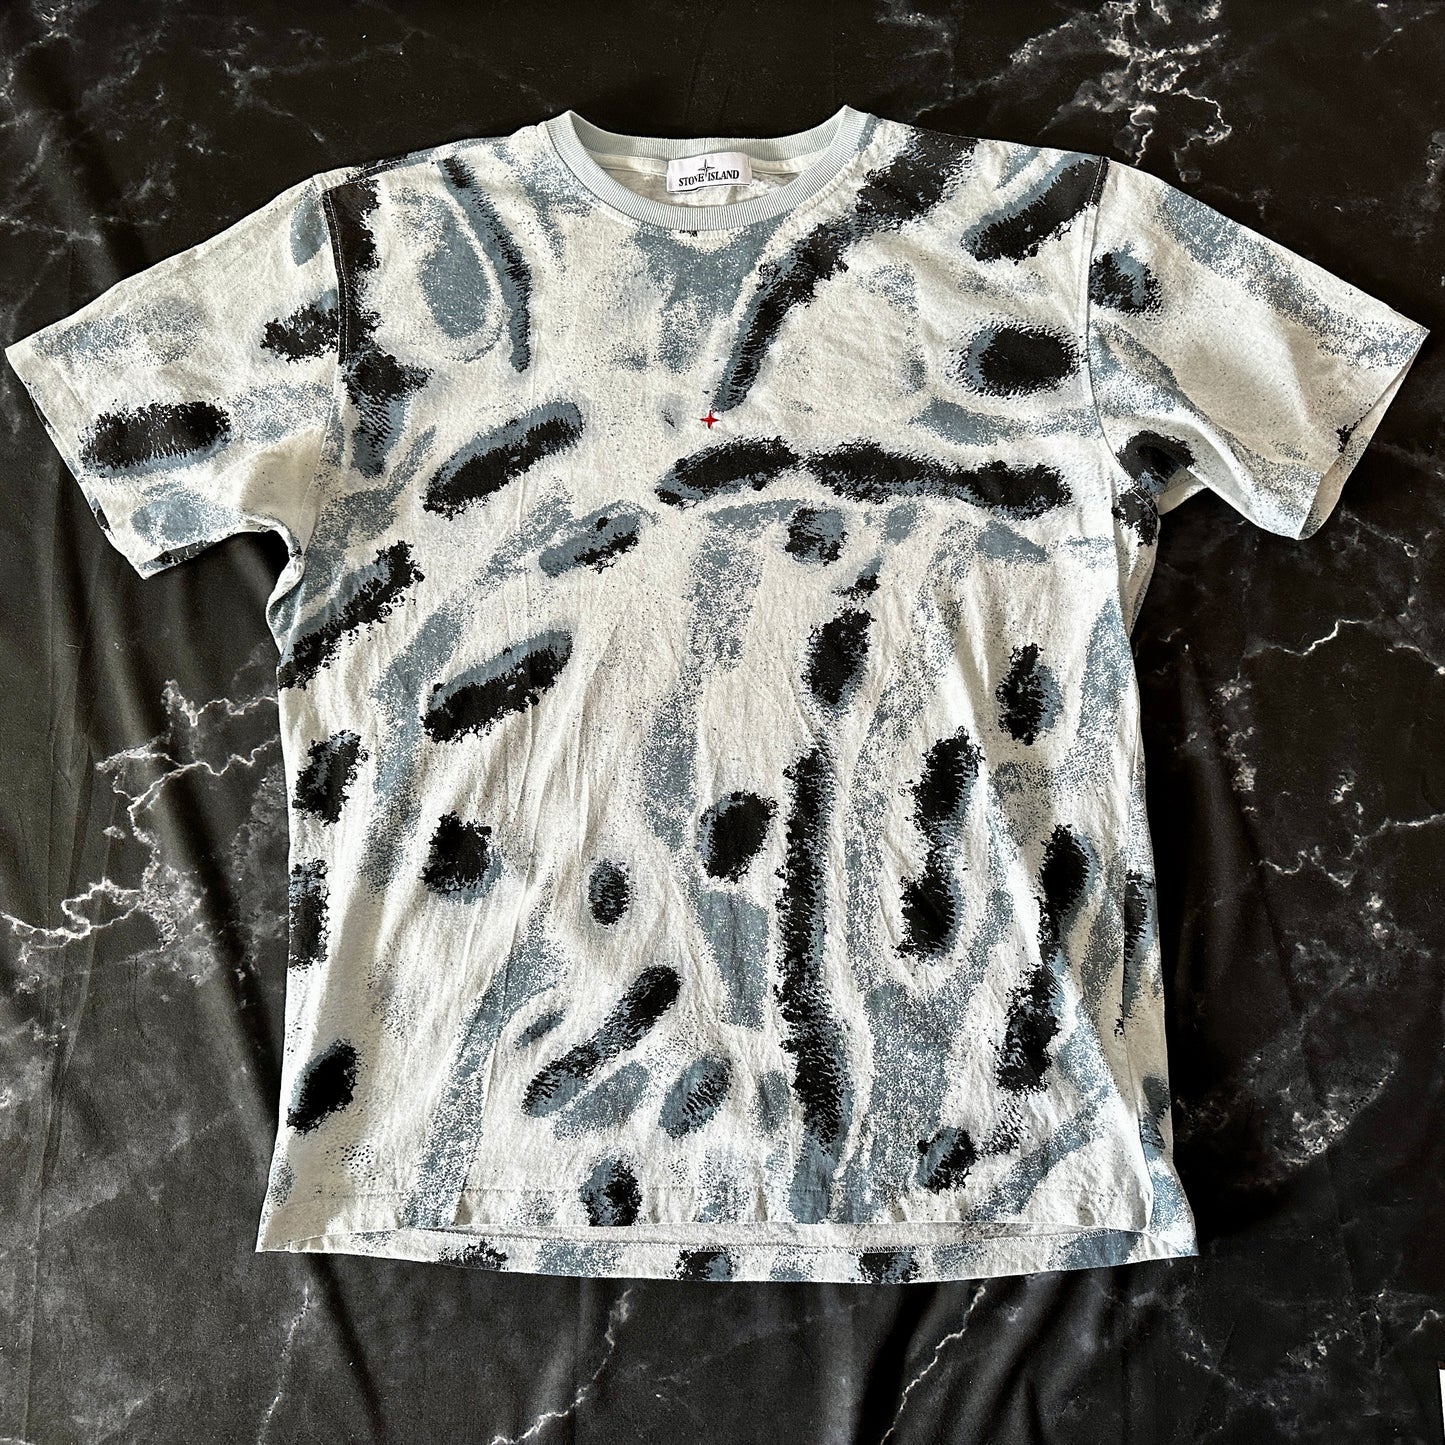 Stone Island Marina Cotton Jersey Reef Camo Print T-Shirt 2022 - XXL